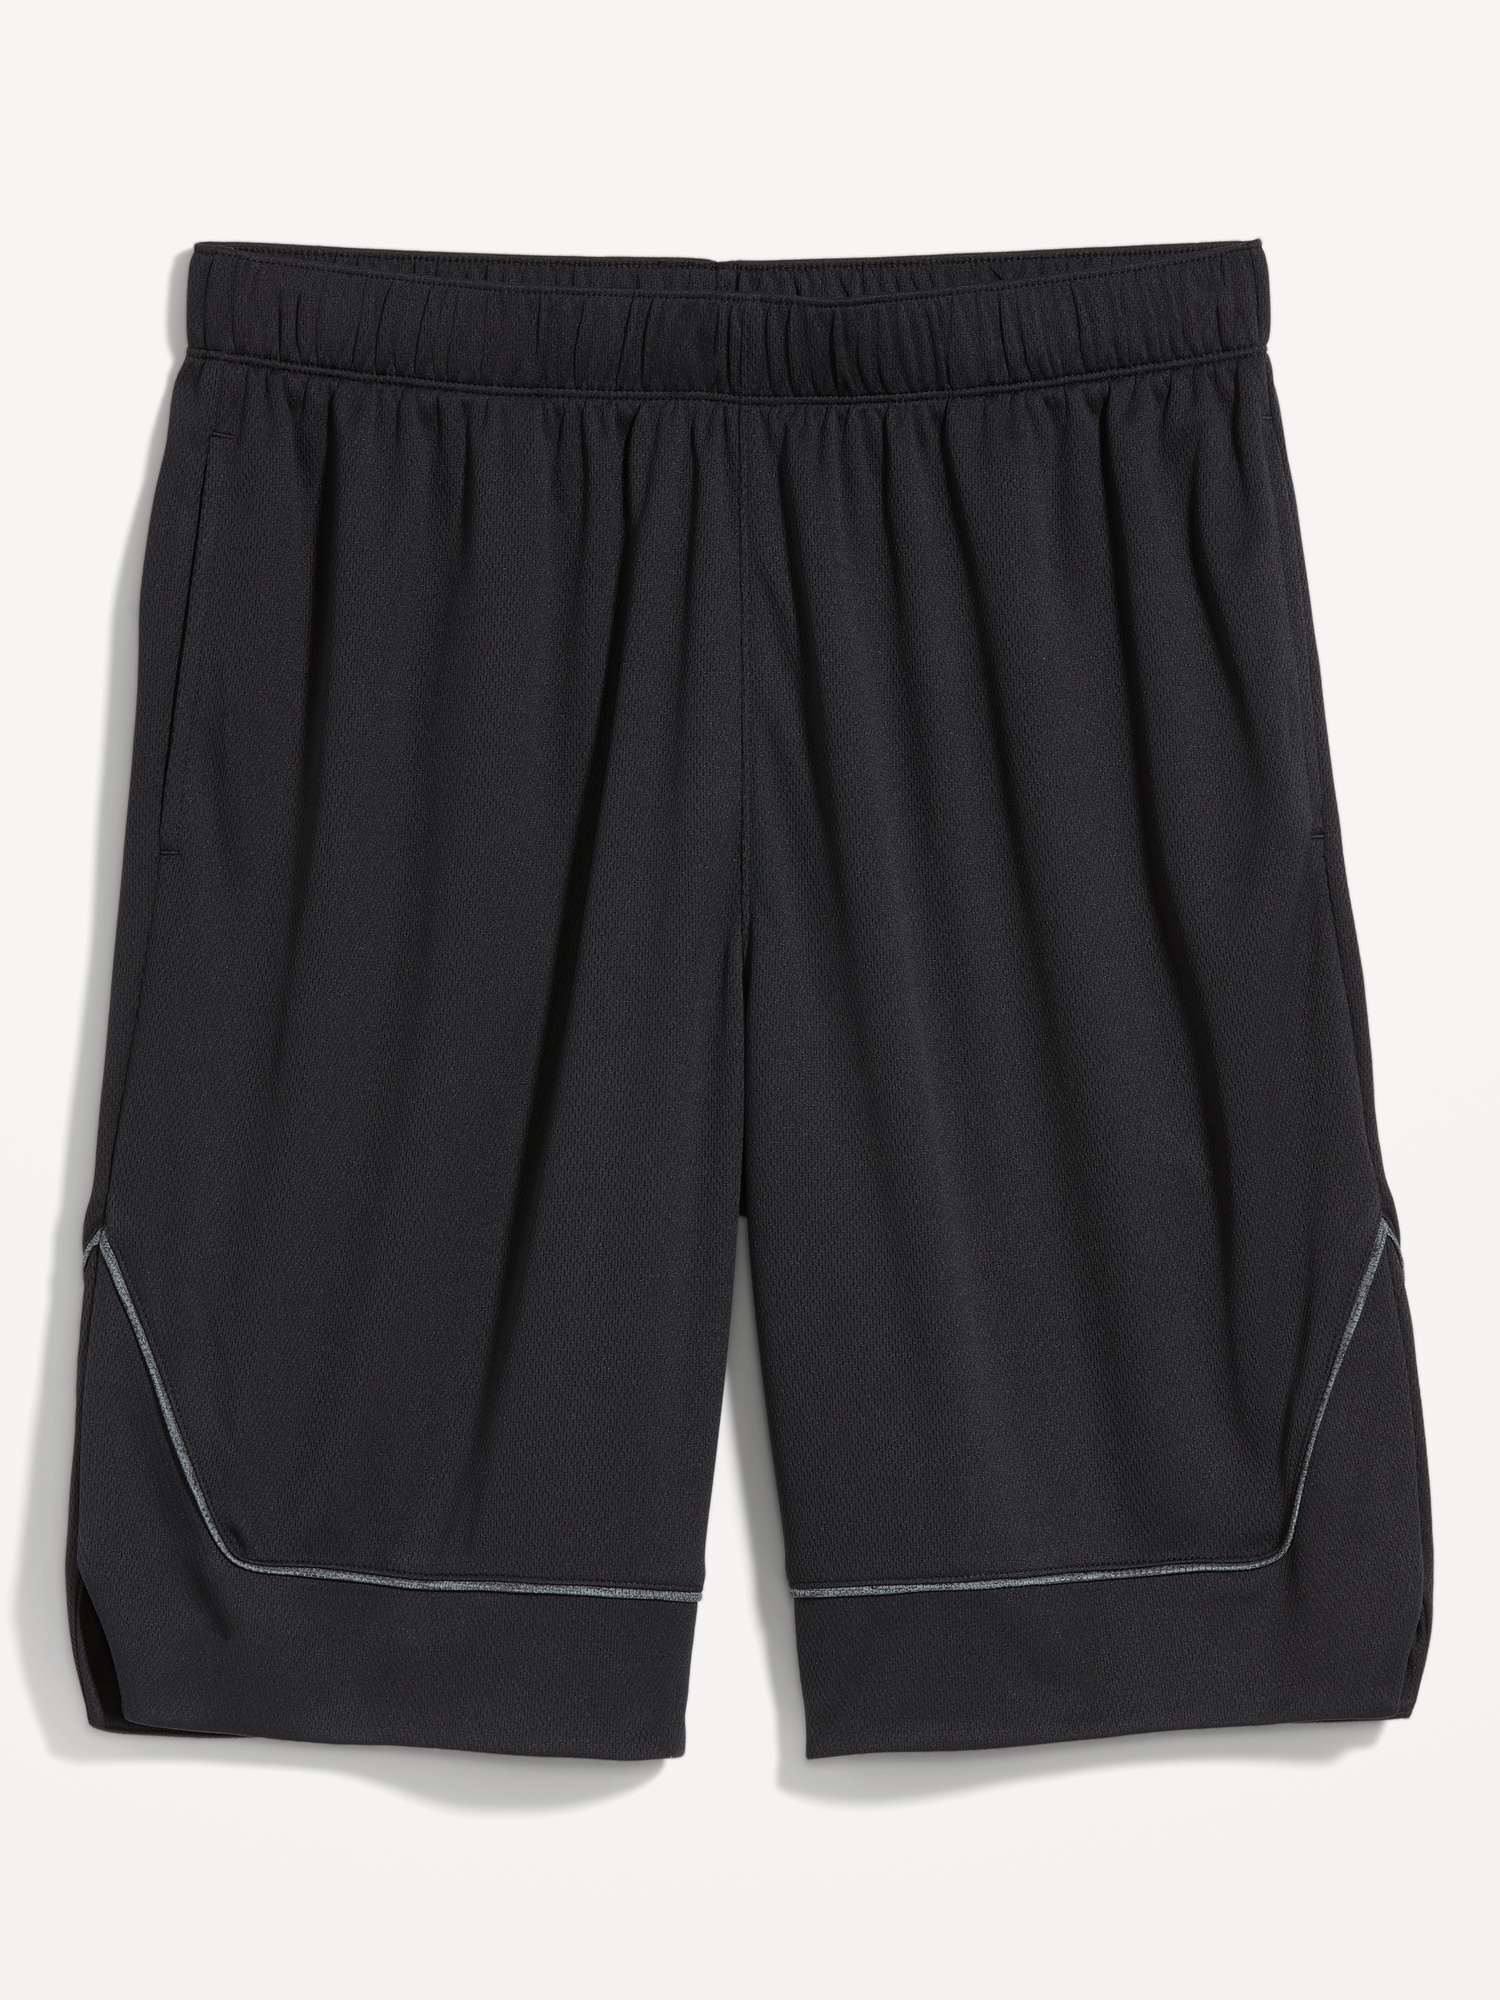 Men's Sport Shorts, 10